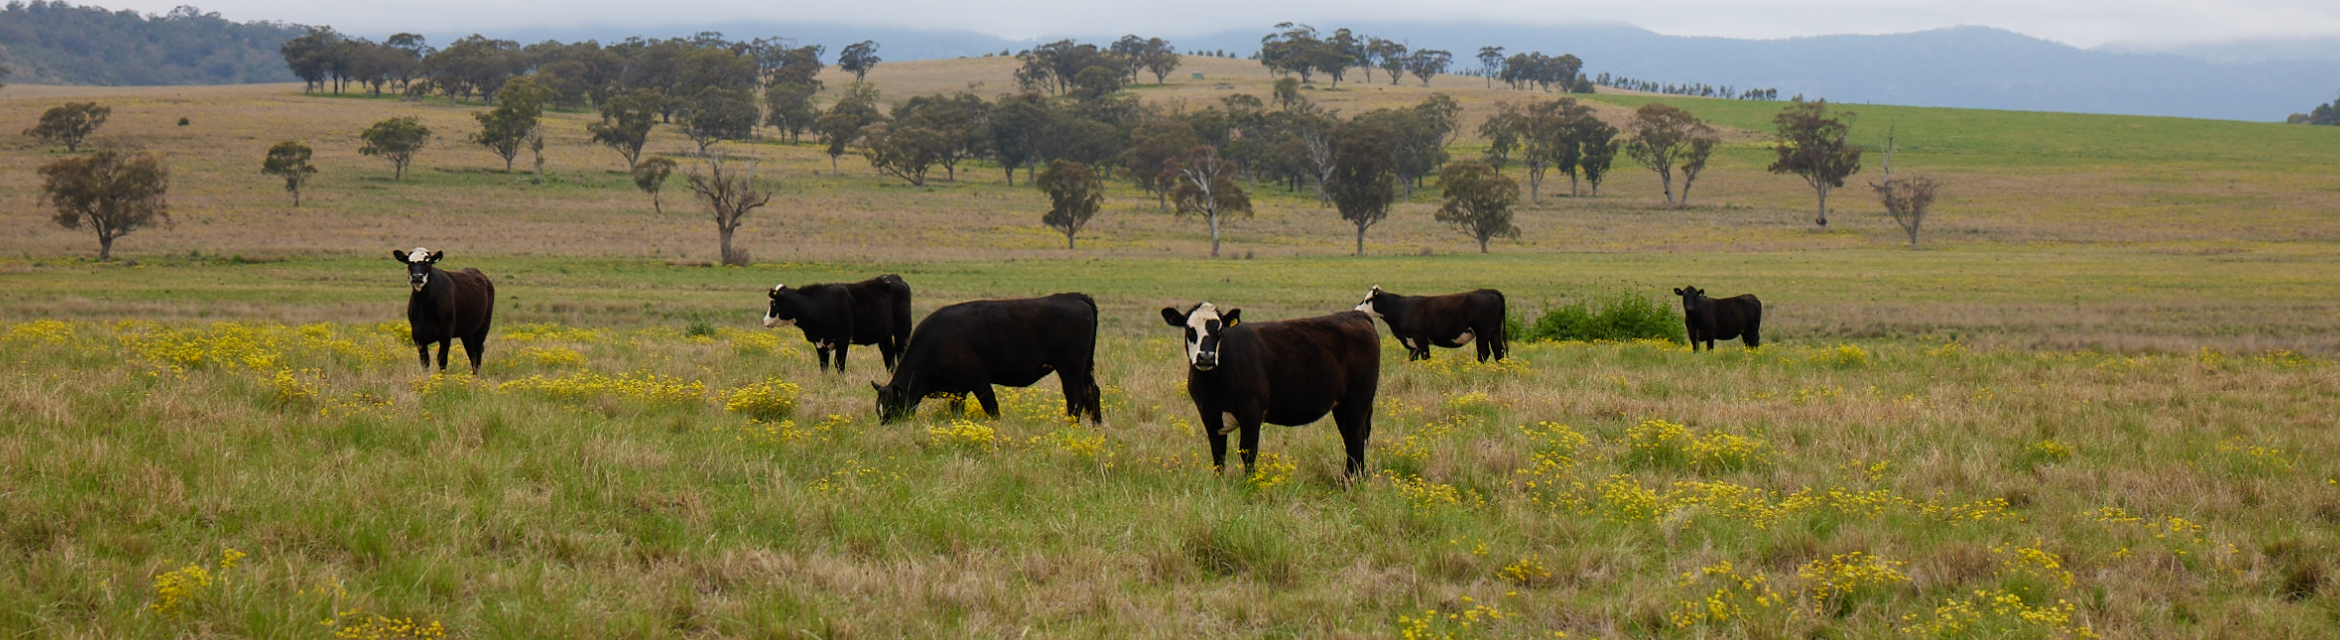 Reducing agricultural emissions | McDonald's Australia